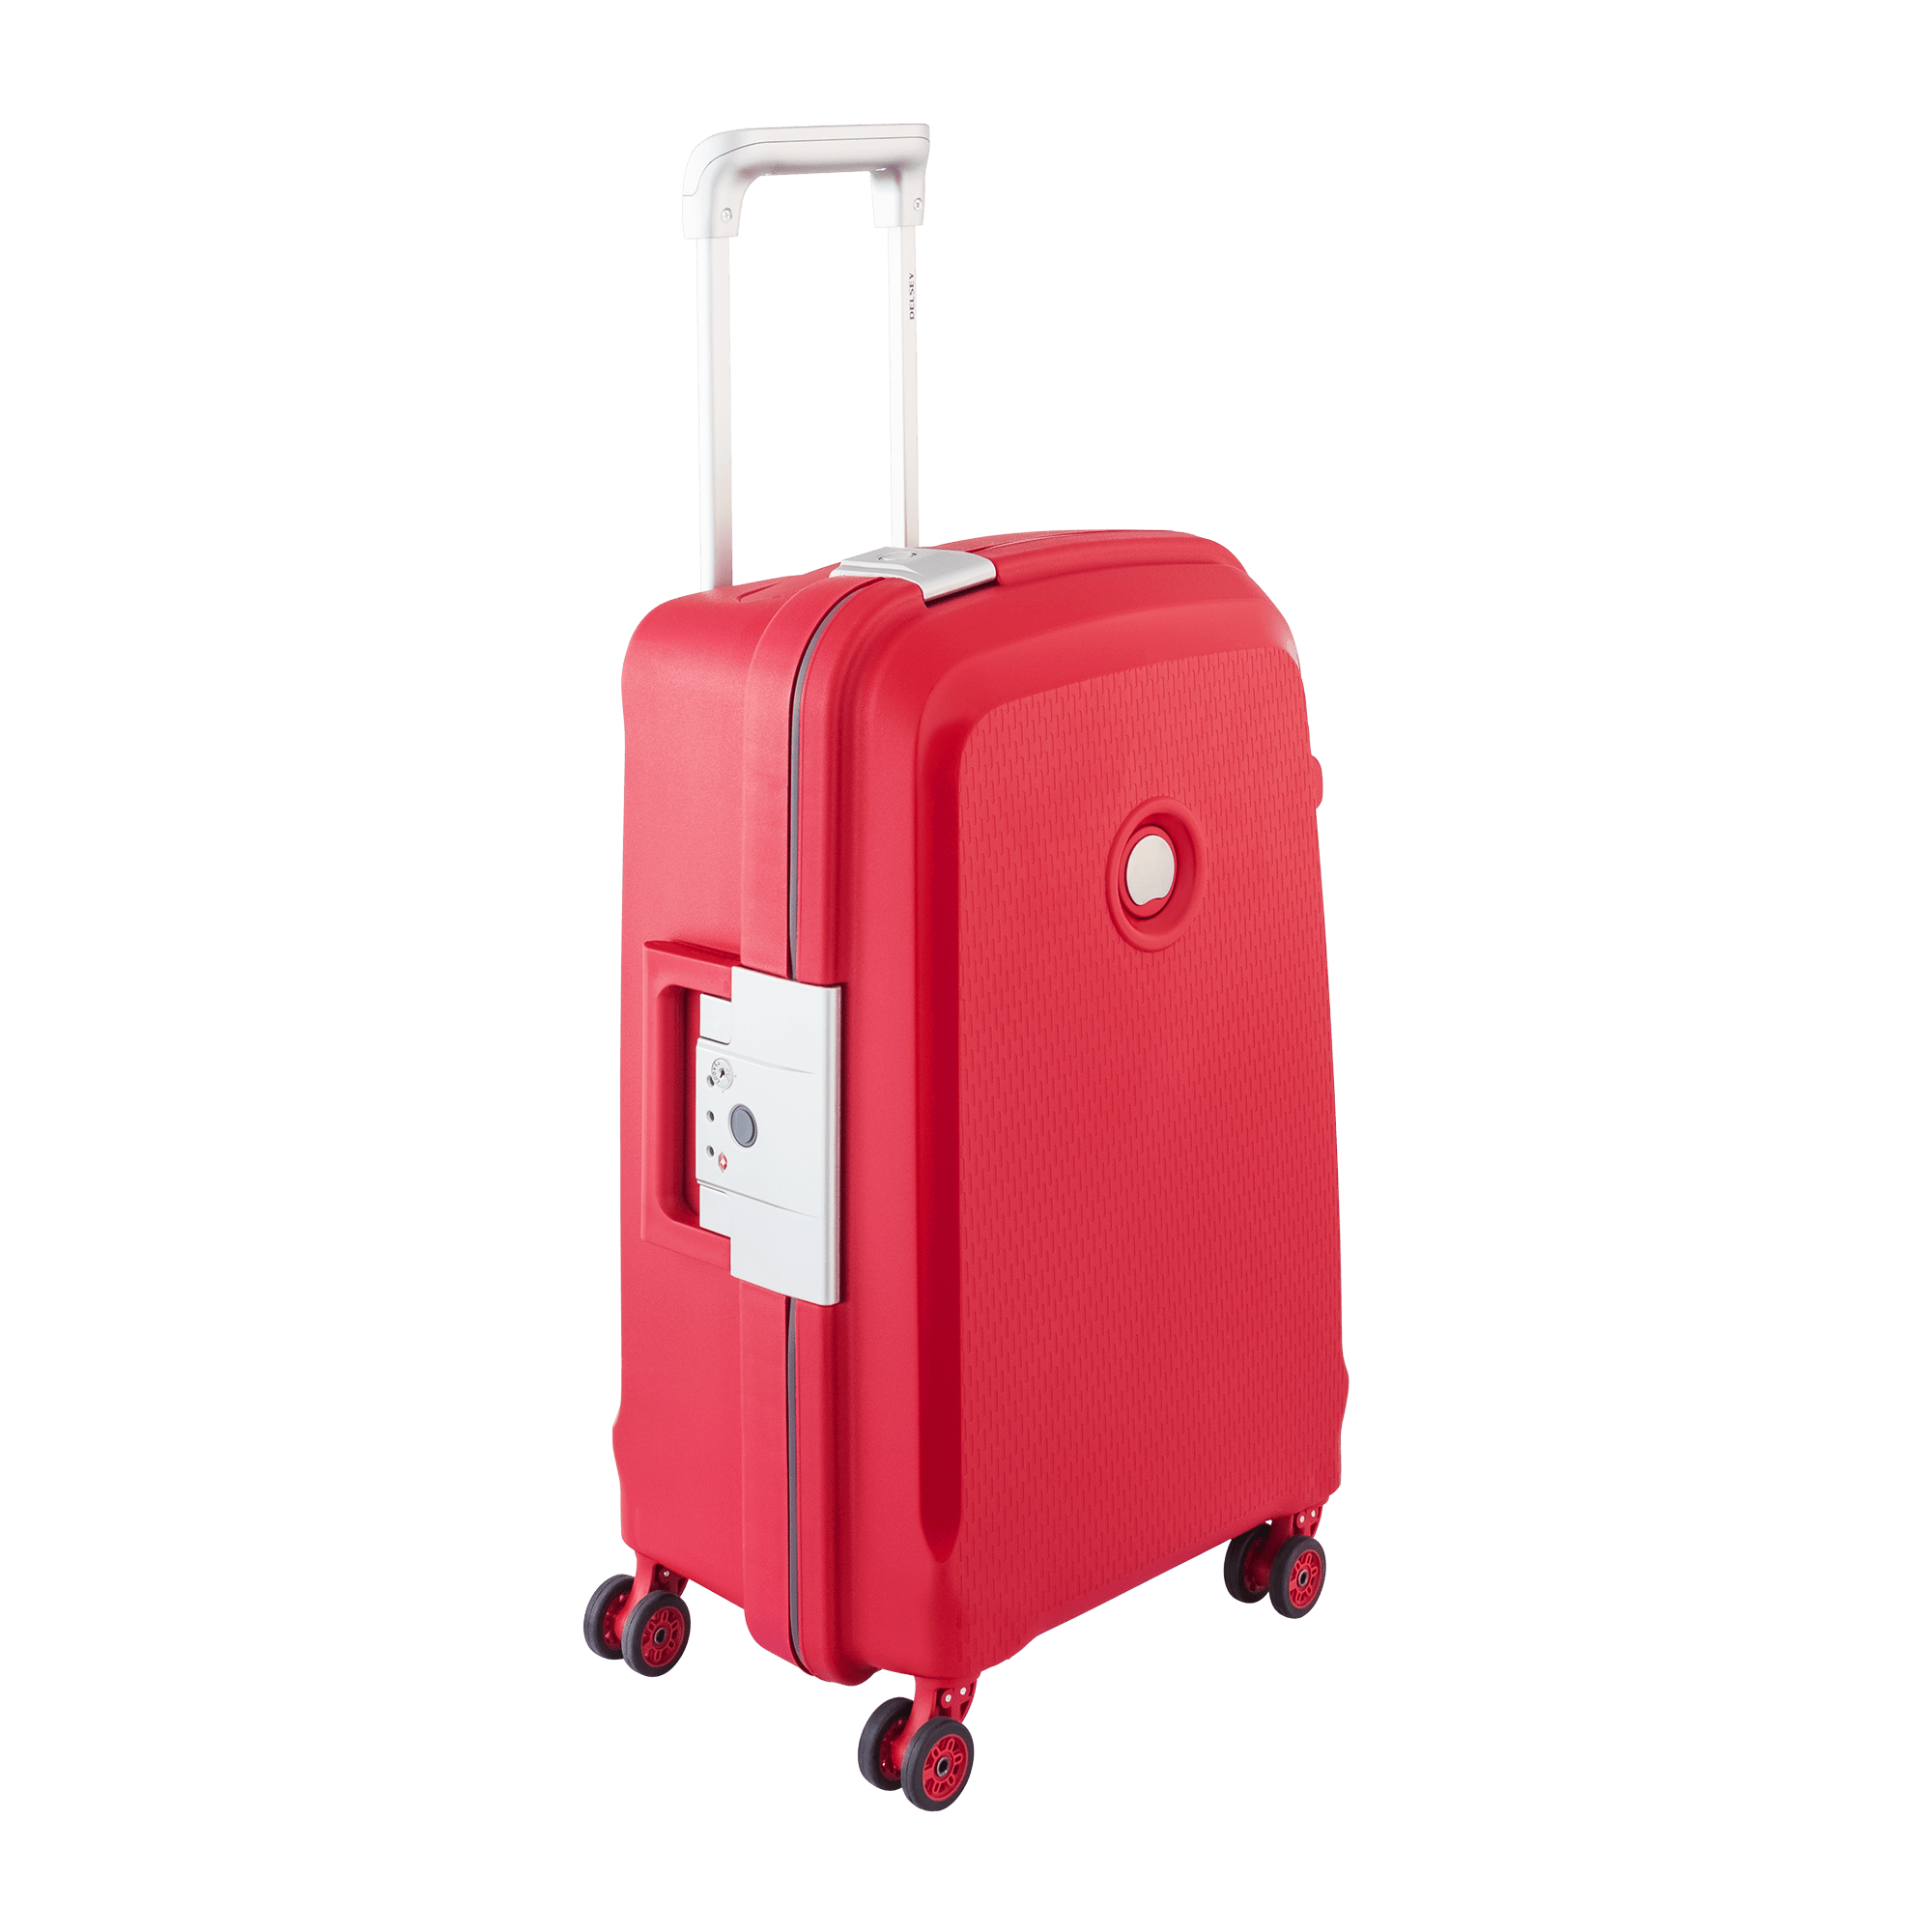 Delsey Belfort Plus 55cm Hardcase 4 Double Wheel Cabin Luggage Trolley Red - 384180104